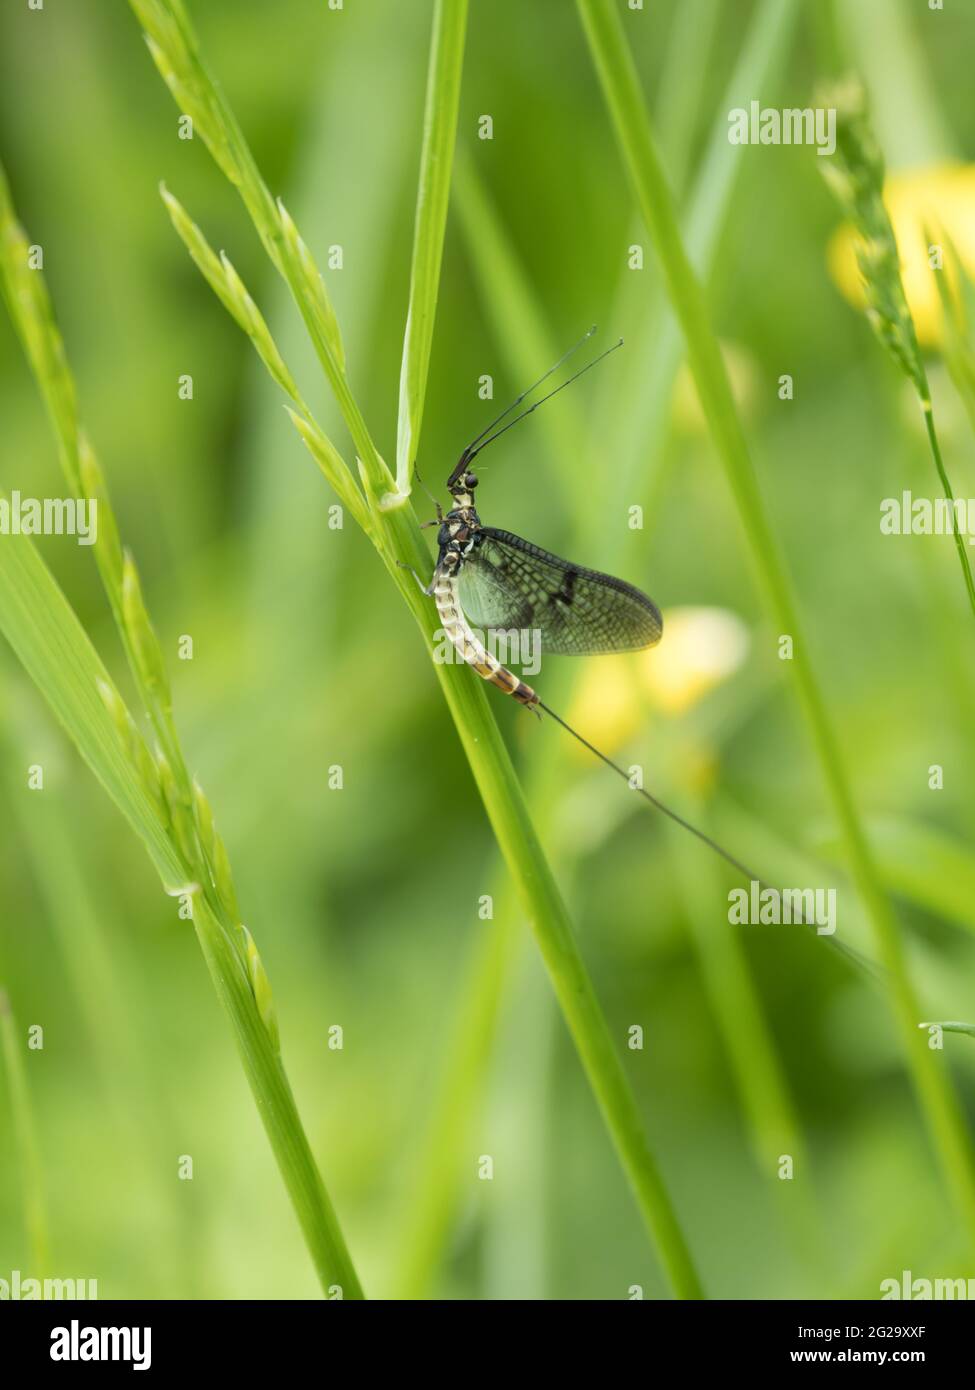 A Common Mayfly (Ephemera danica) resting on a reed stem. Stock Photo